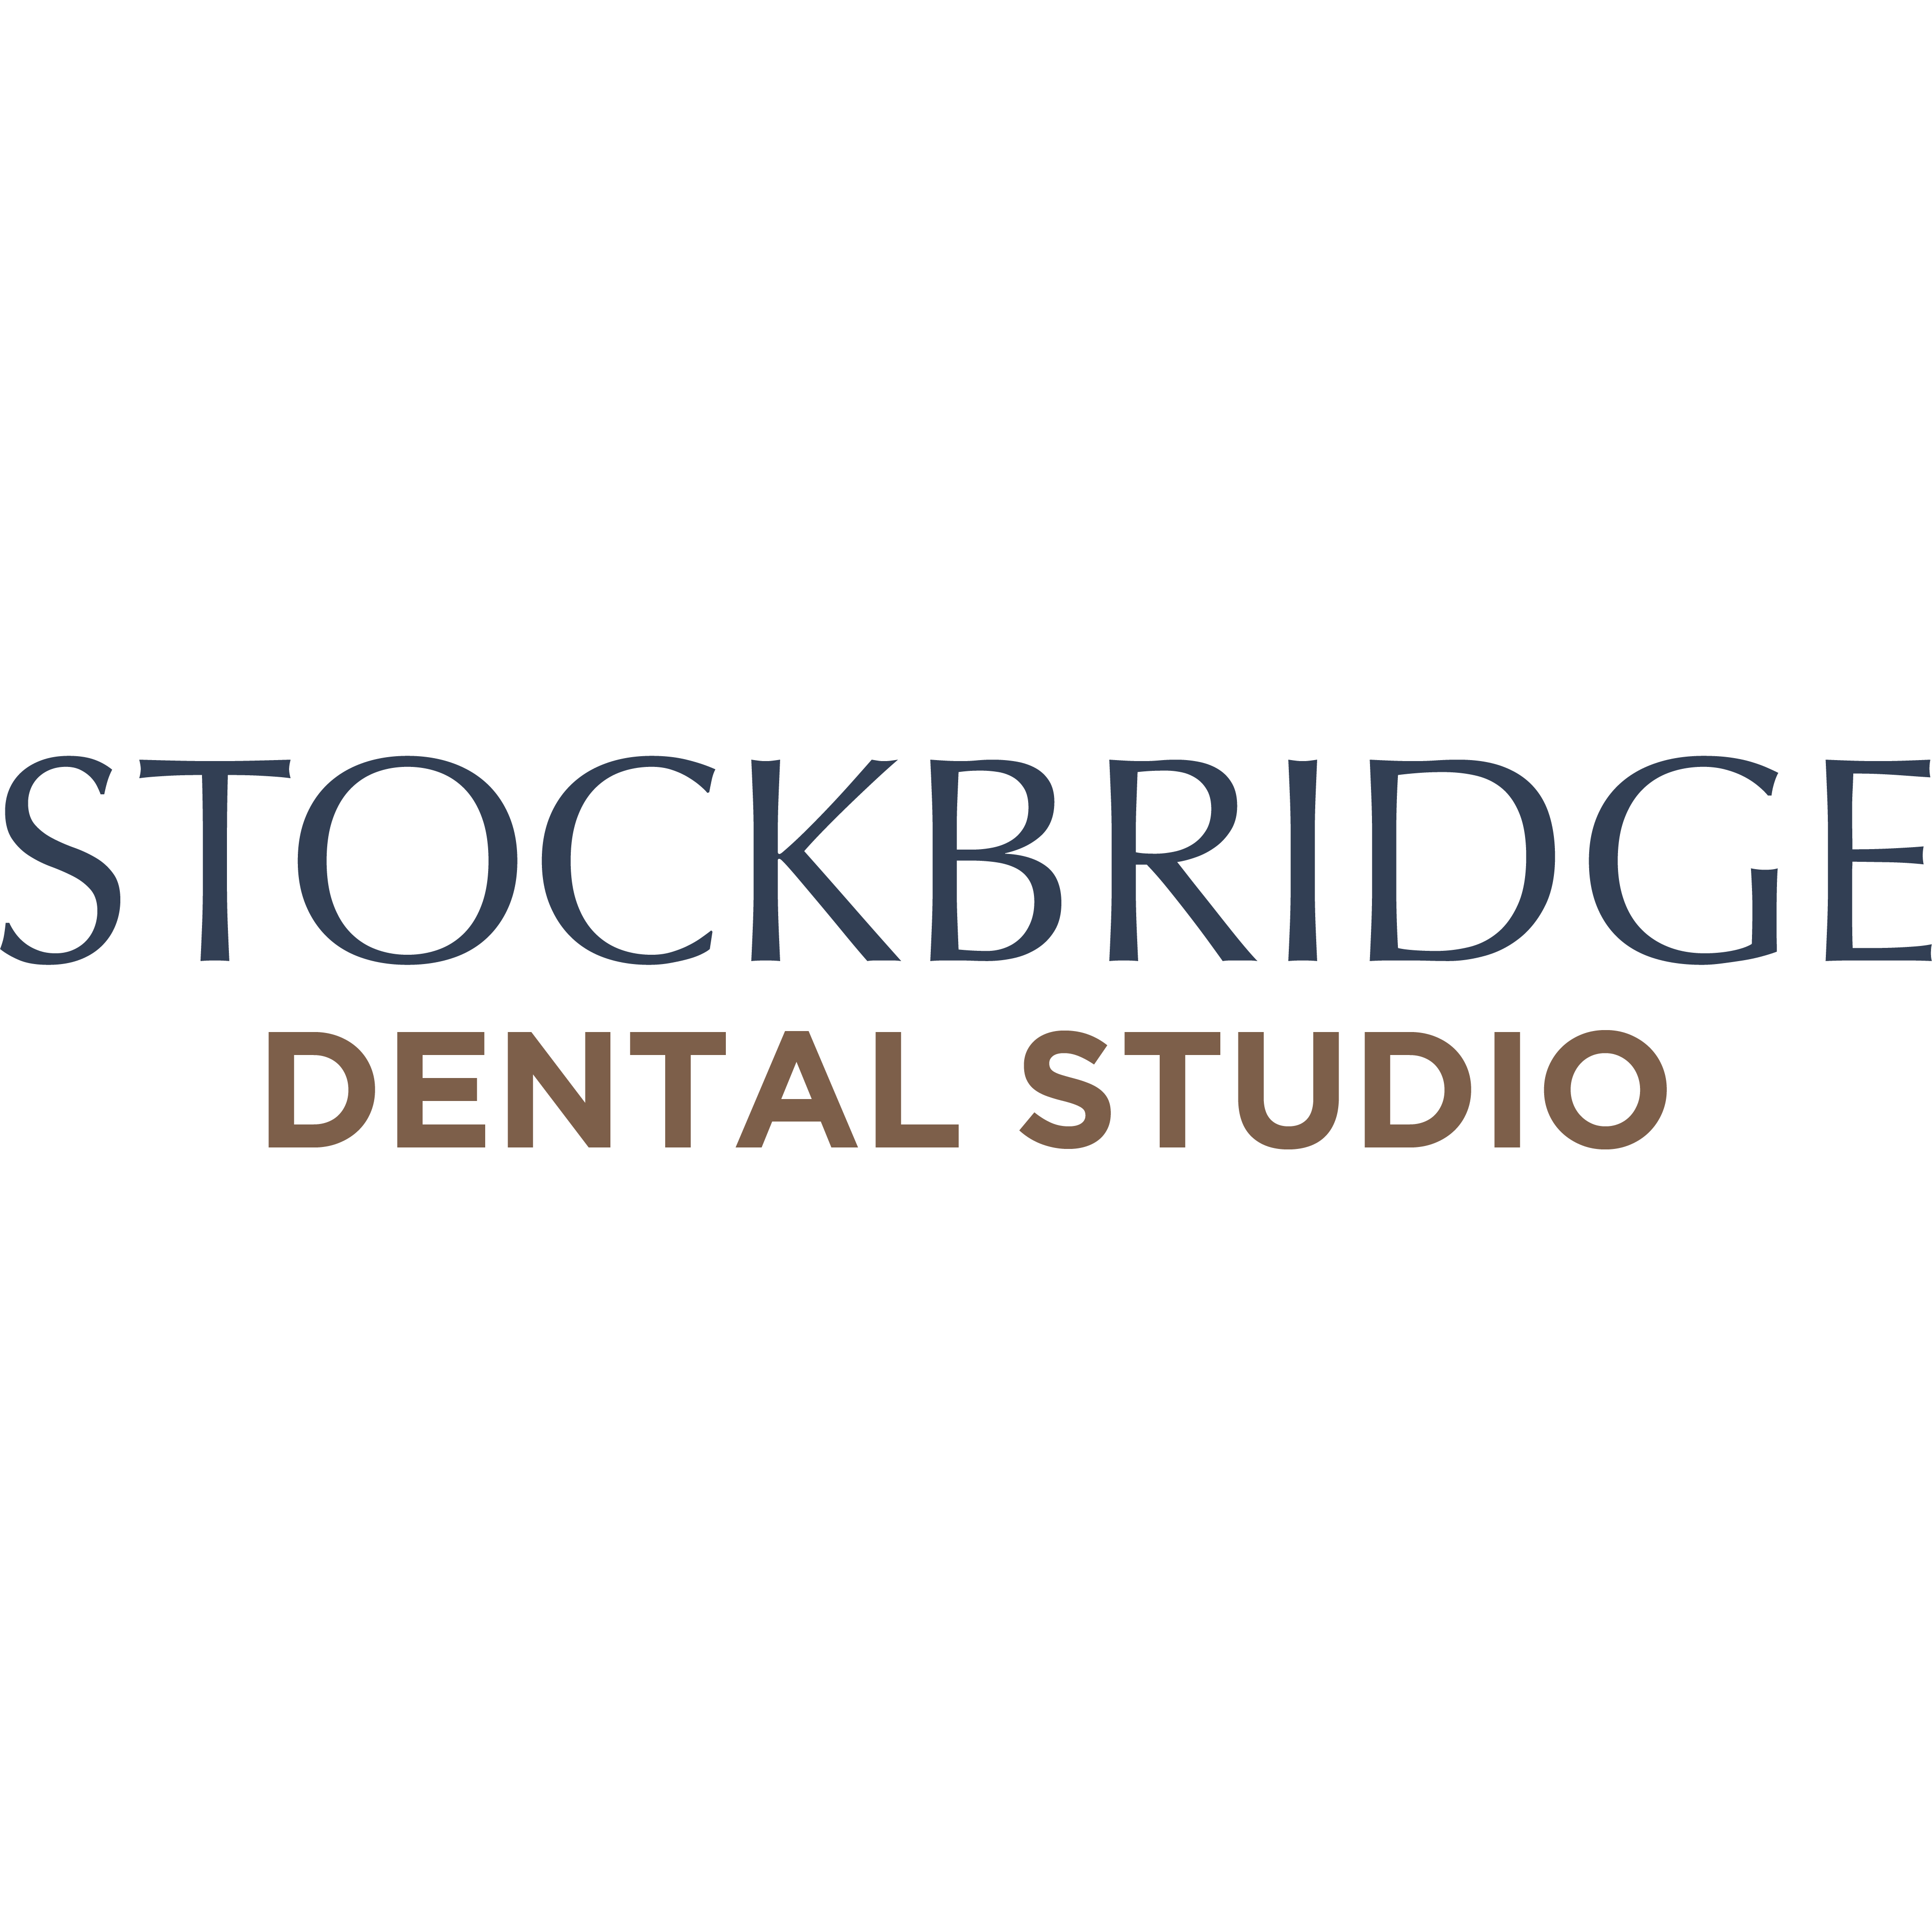 Stockbridge Dental Studio